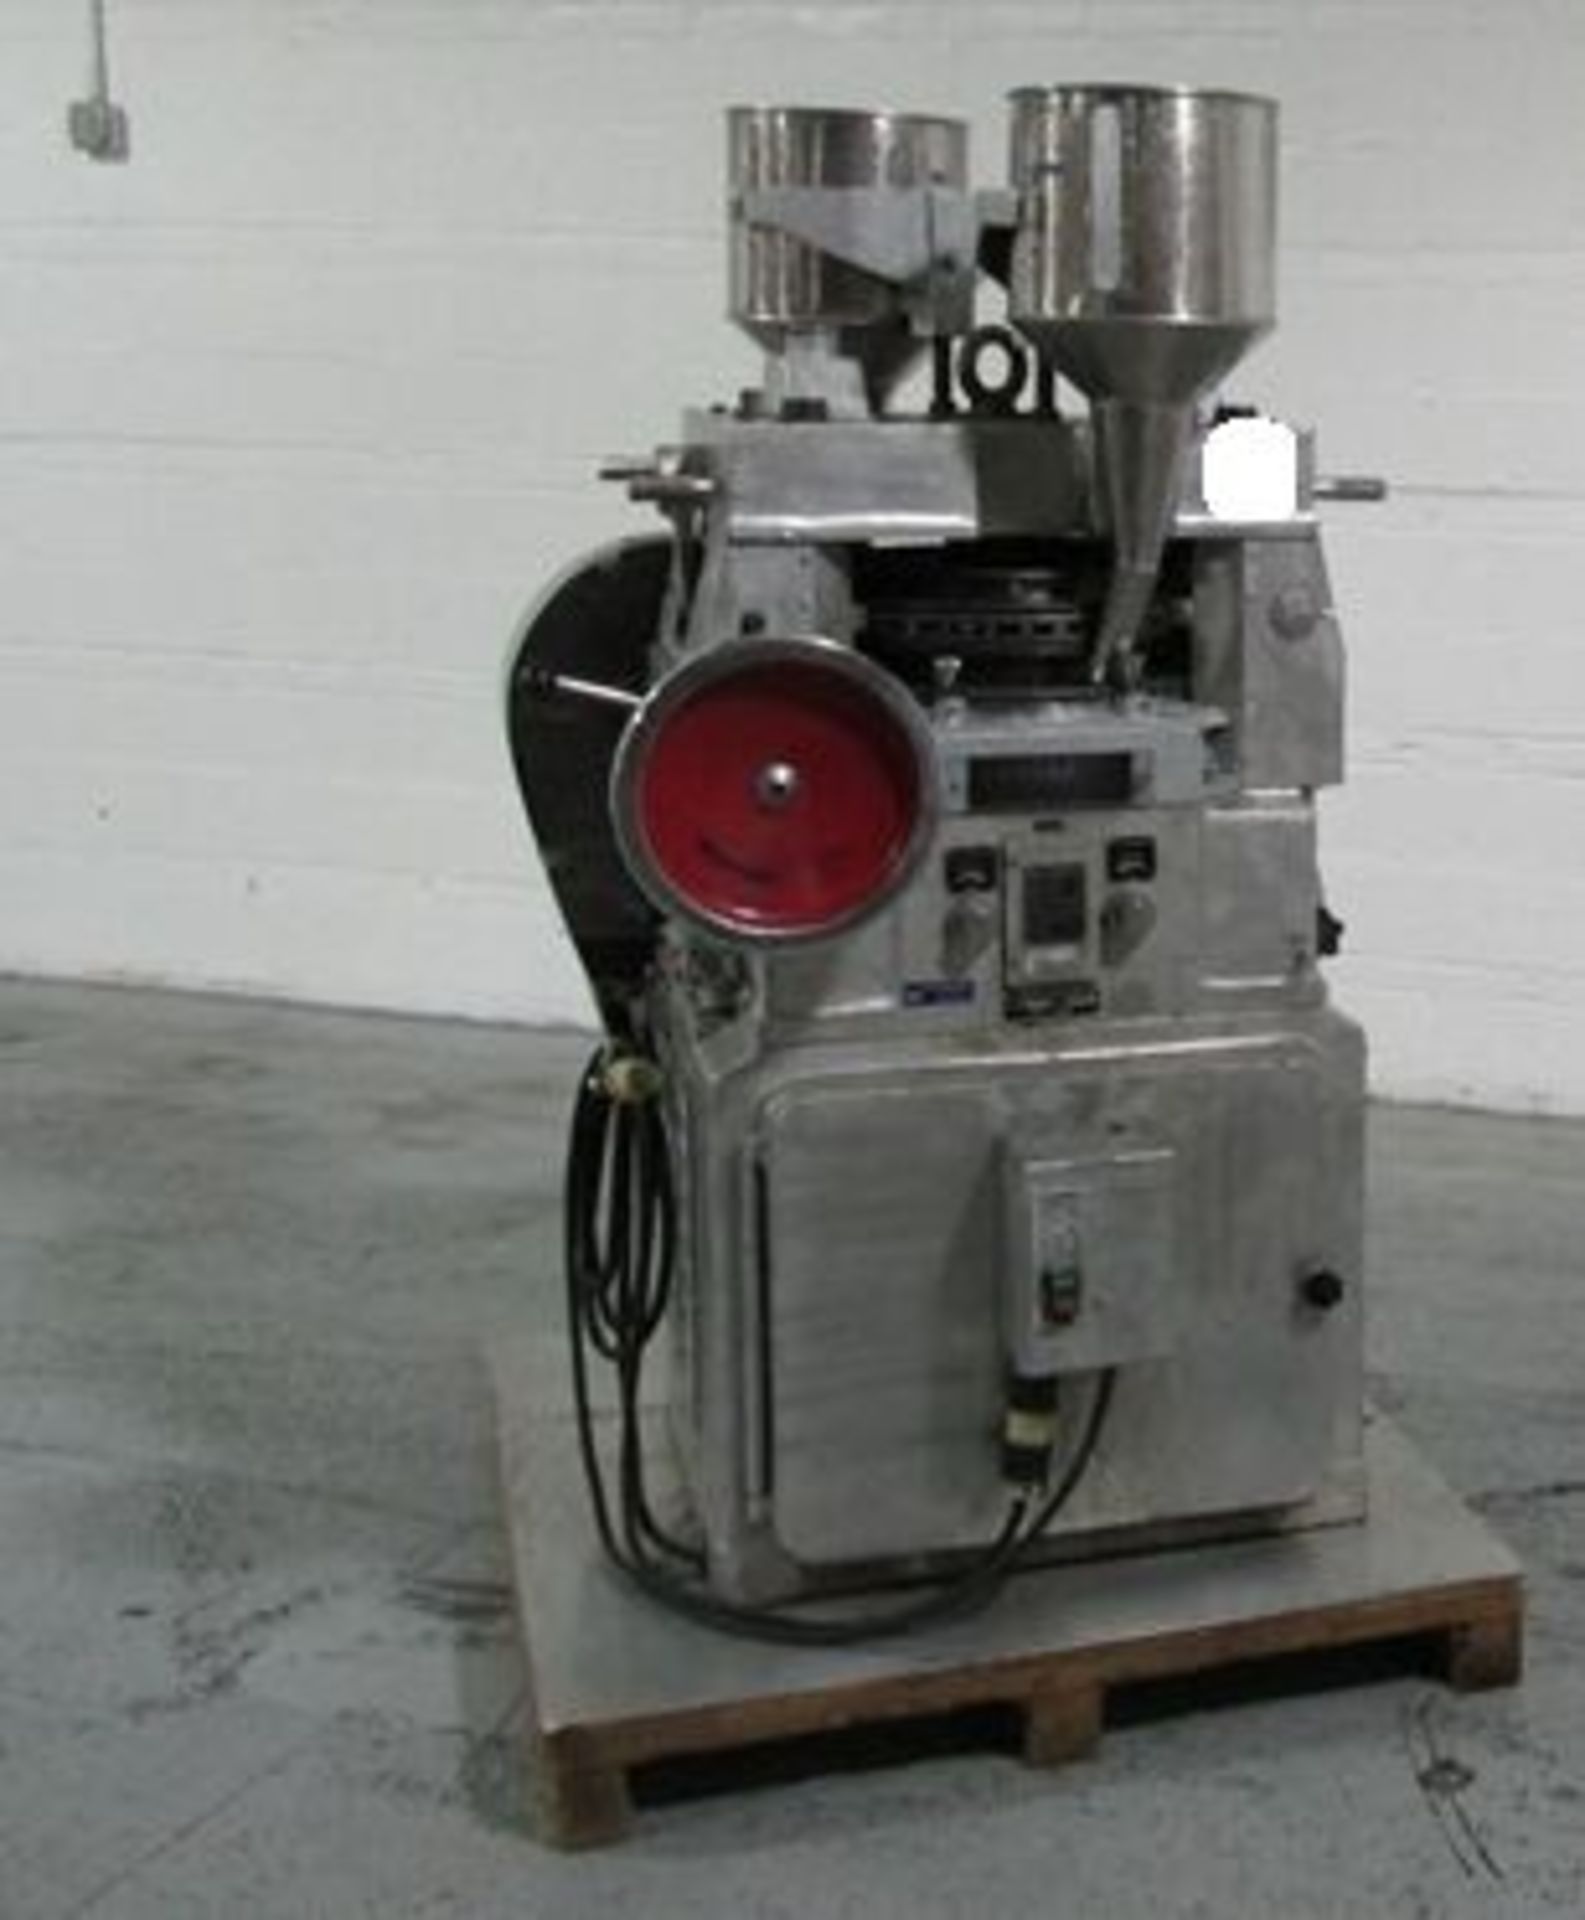 ZP rotary tablet press, model ZP37, 37 station